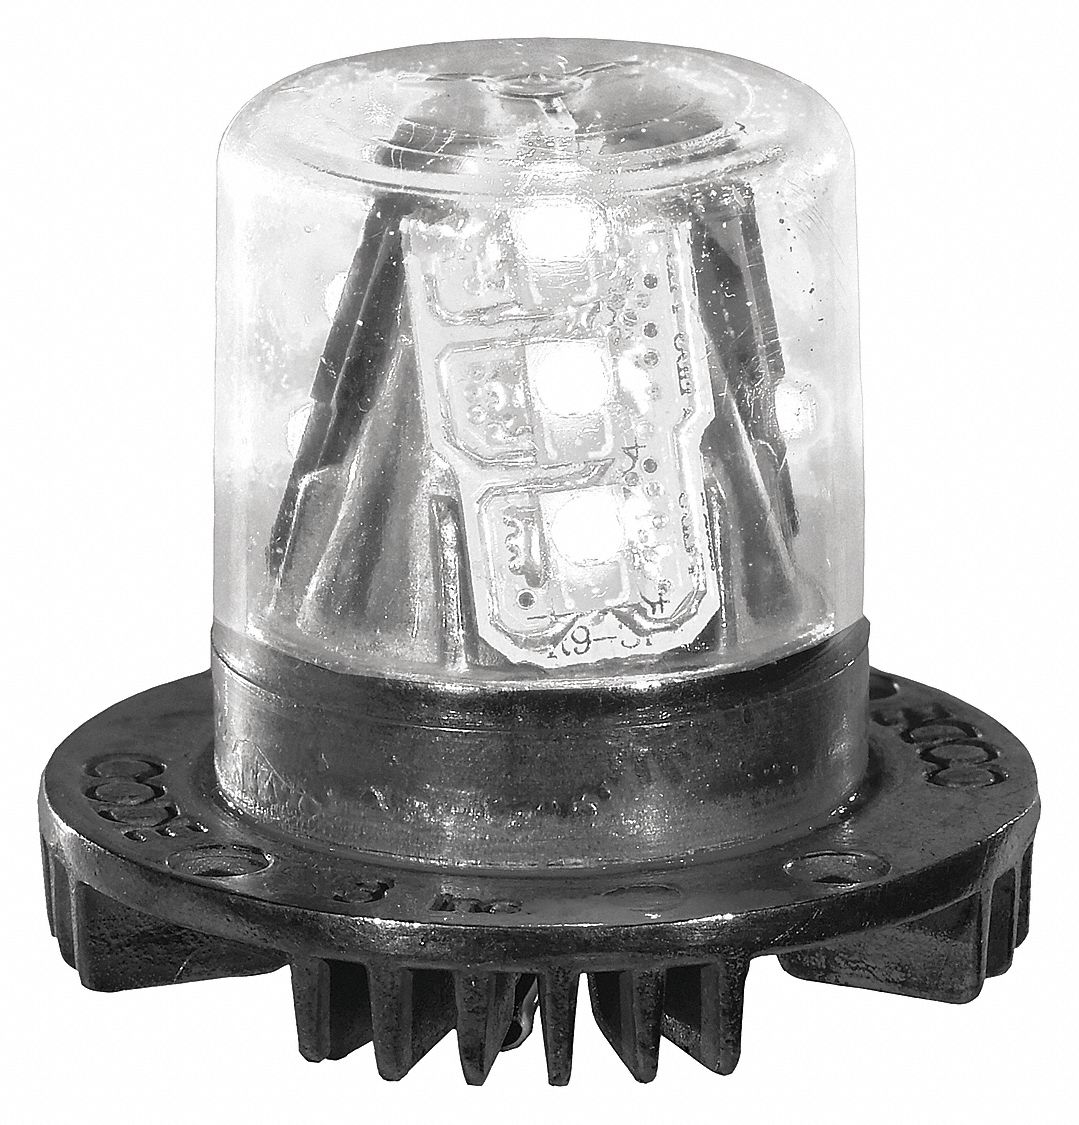 LED Strobe Light Head: 30 Flash Patterns - Vehicle Lighting, Permanent, Pigtail, LED, White